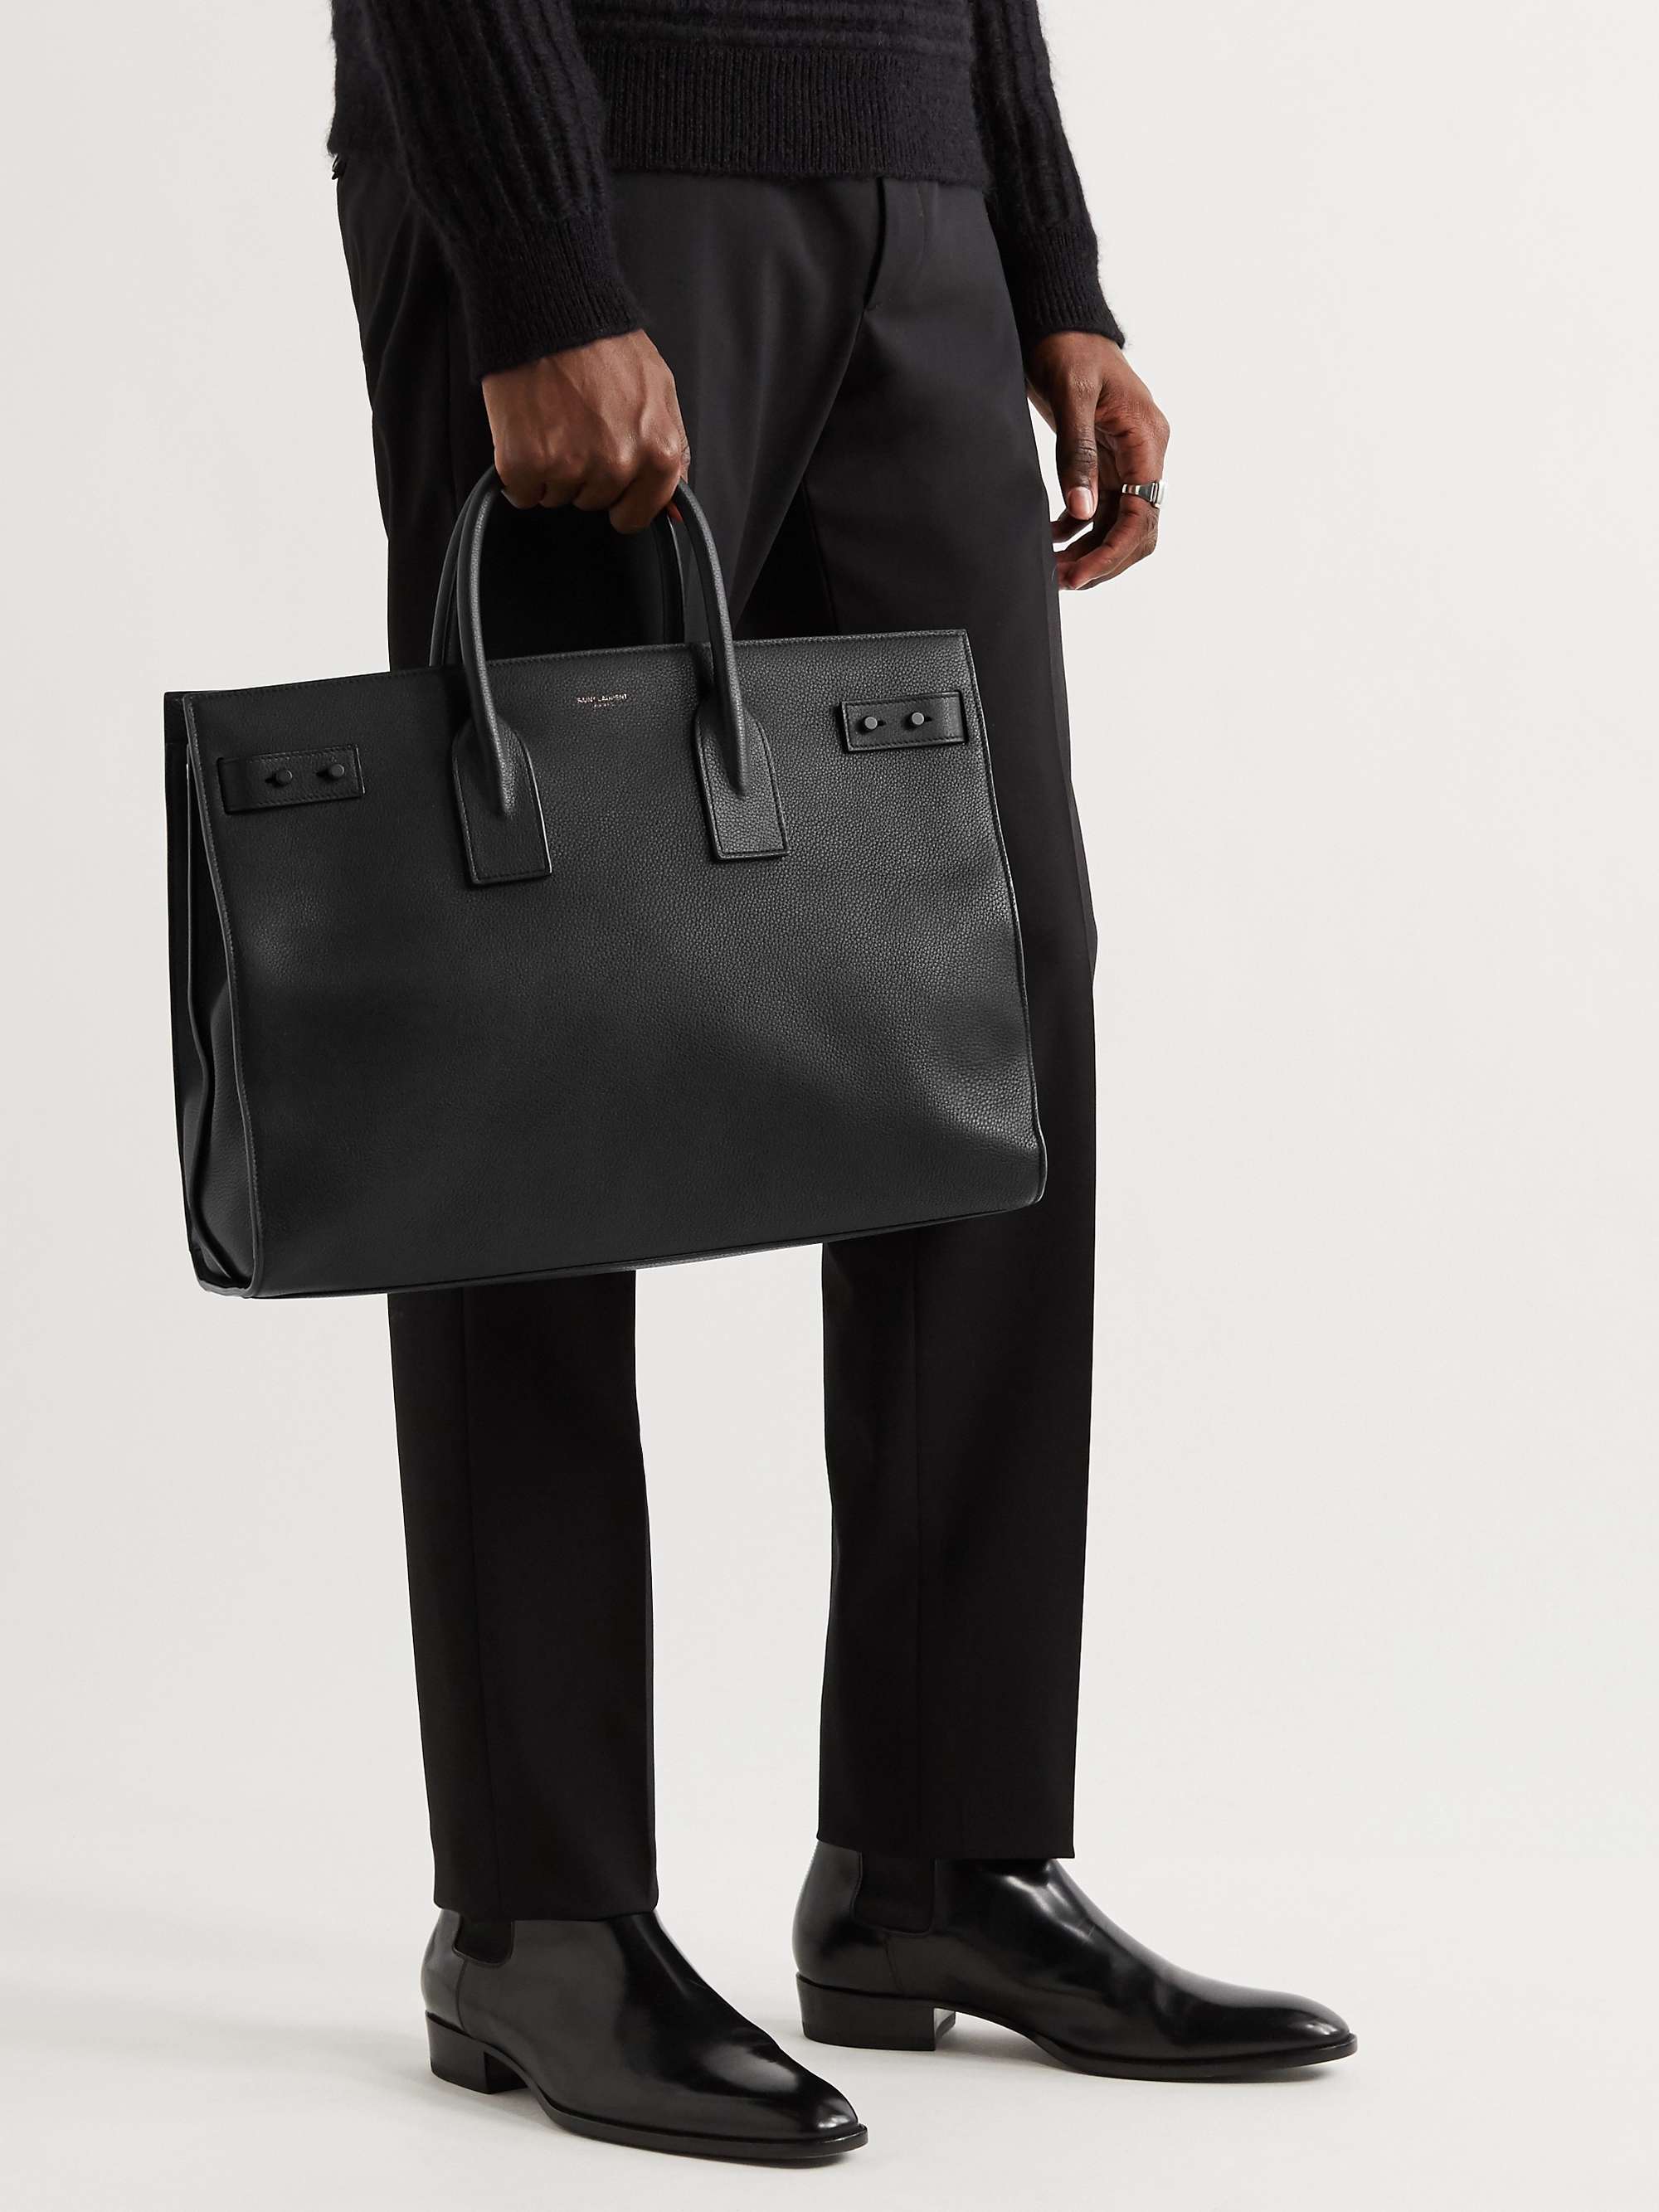 Black Croc-Effect Leather Tote Bag | SAINT LAURENT | MR PORTER